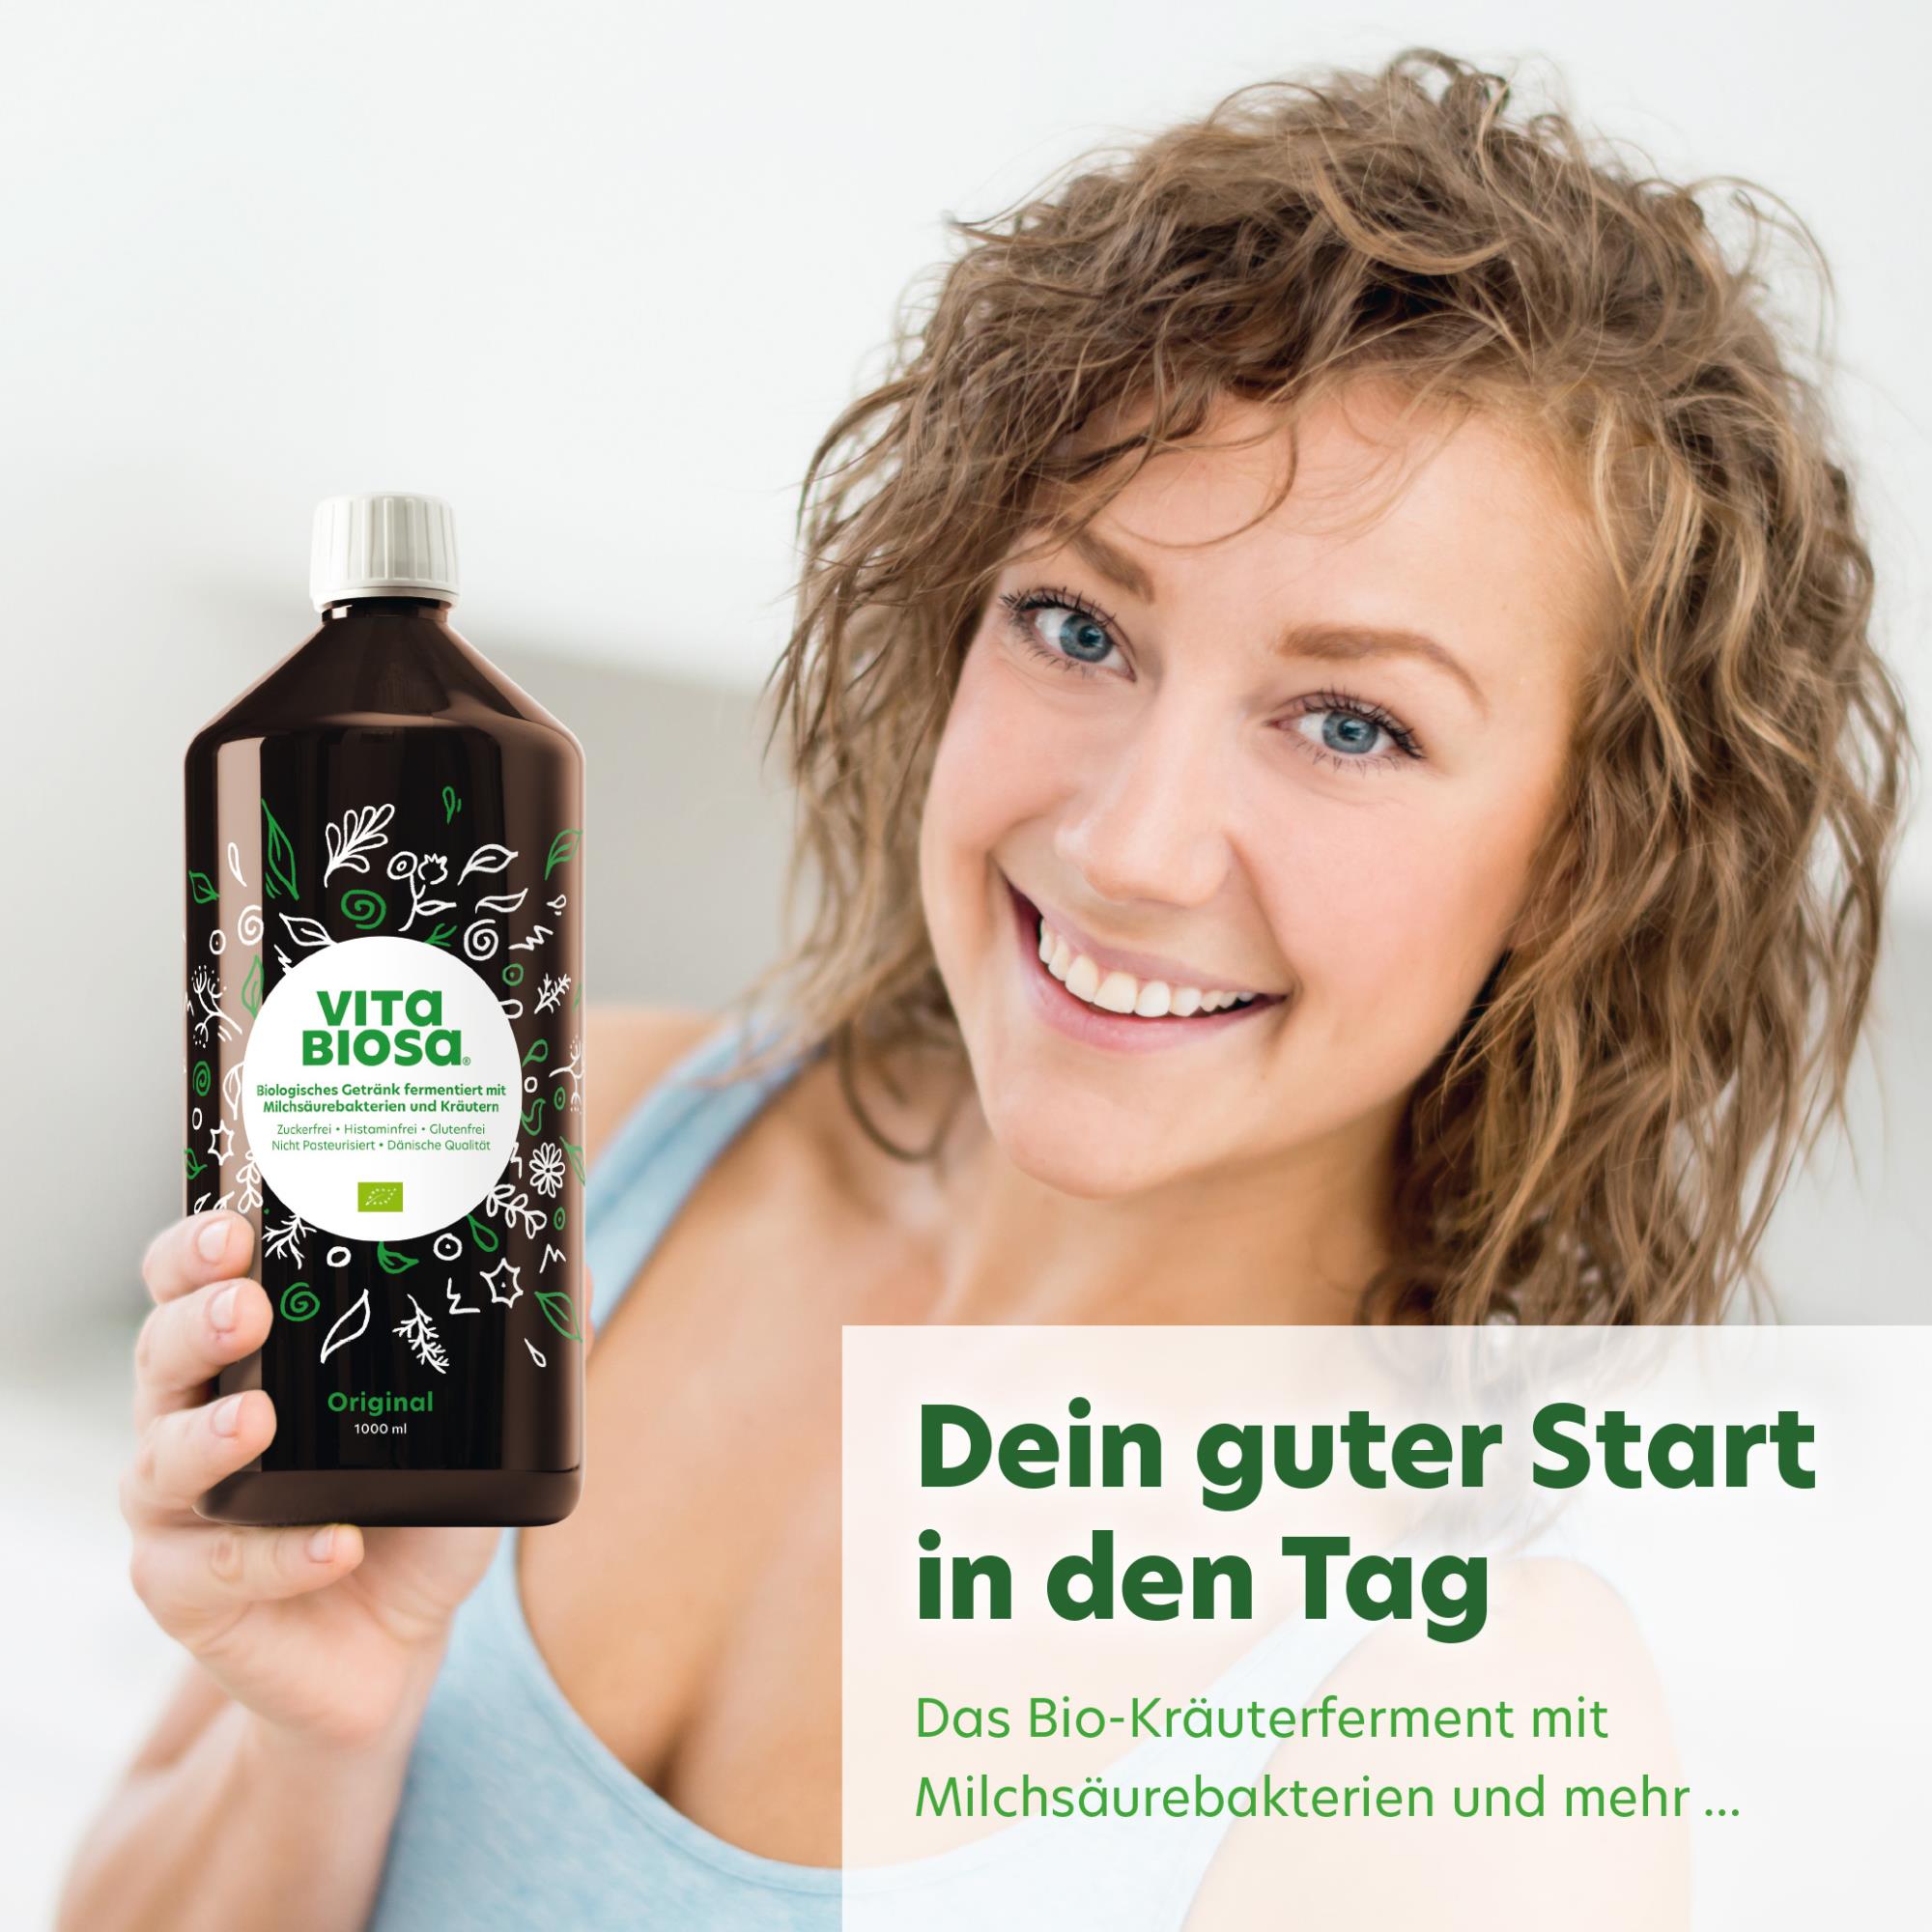 Vita Biosa Original Kräuter histaminfrei Milchsäurebakterien ohne Alkohol vegan